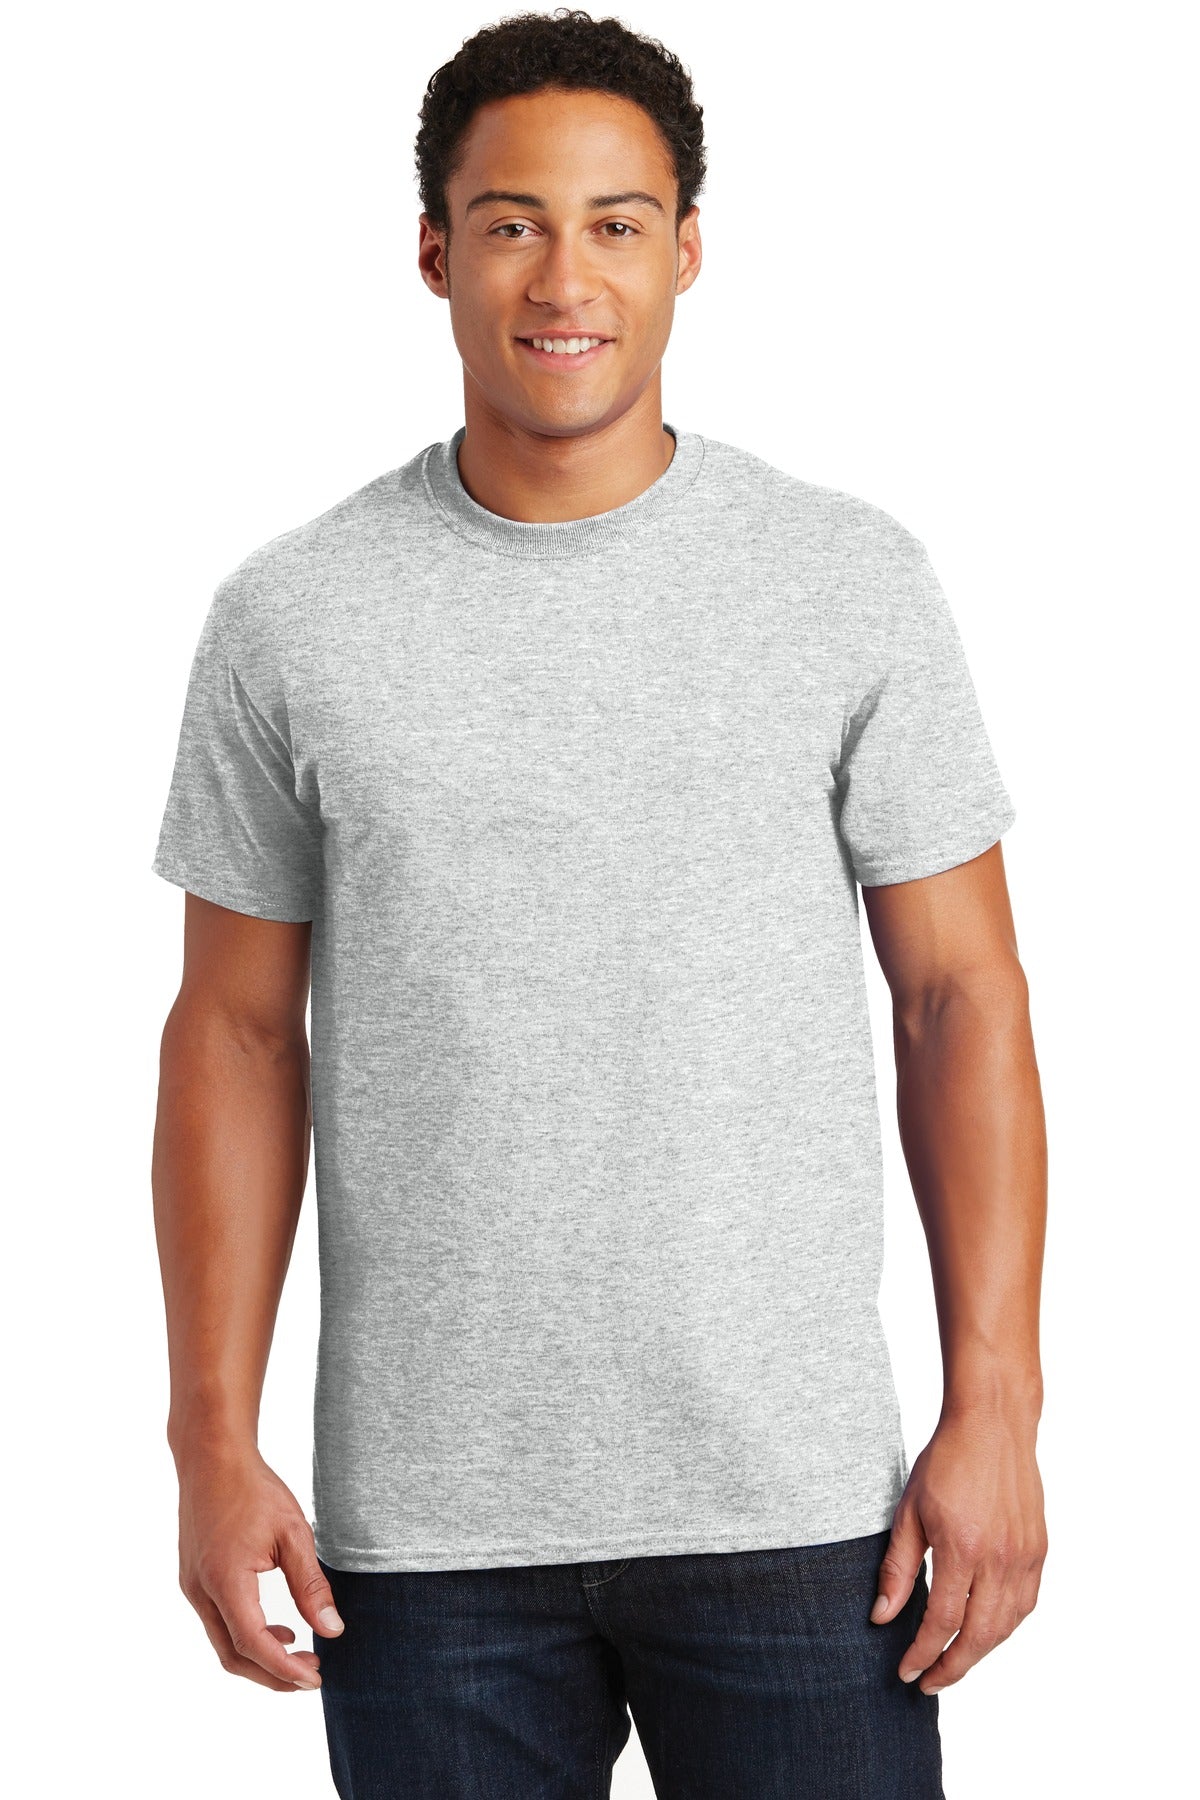 Gildan - Ultra Cotton 100% US Cotton T-Shirt. 2000 - Ash